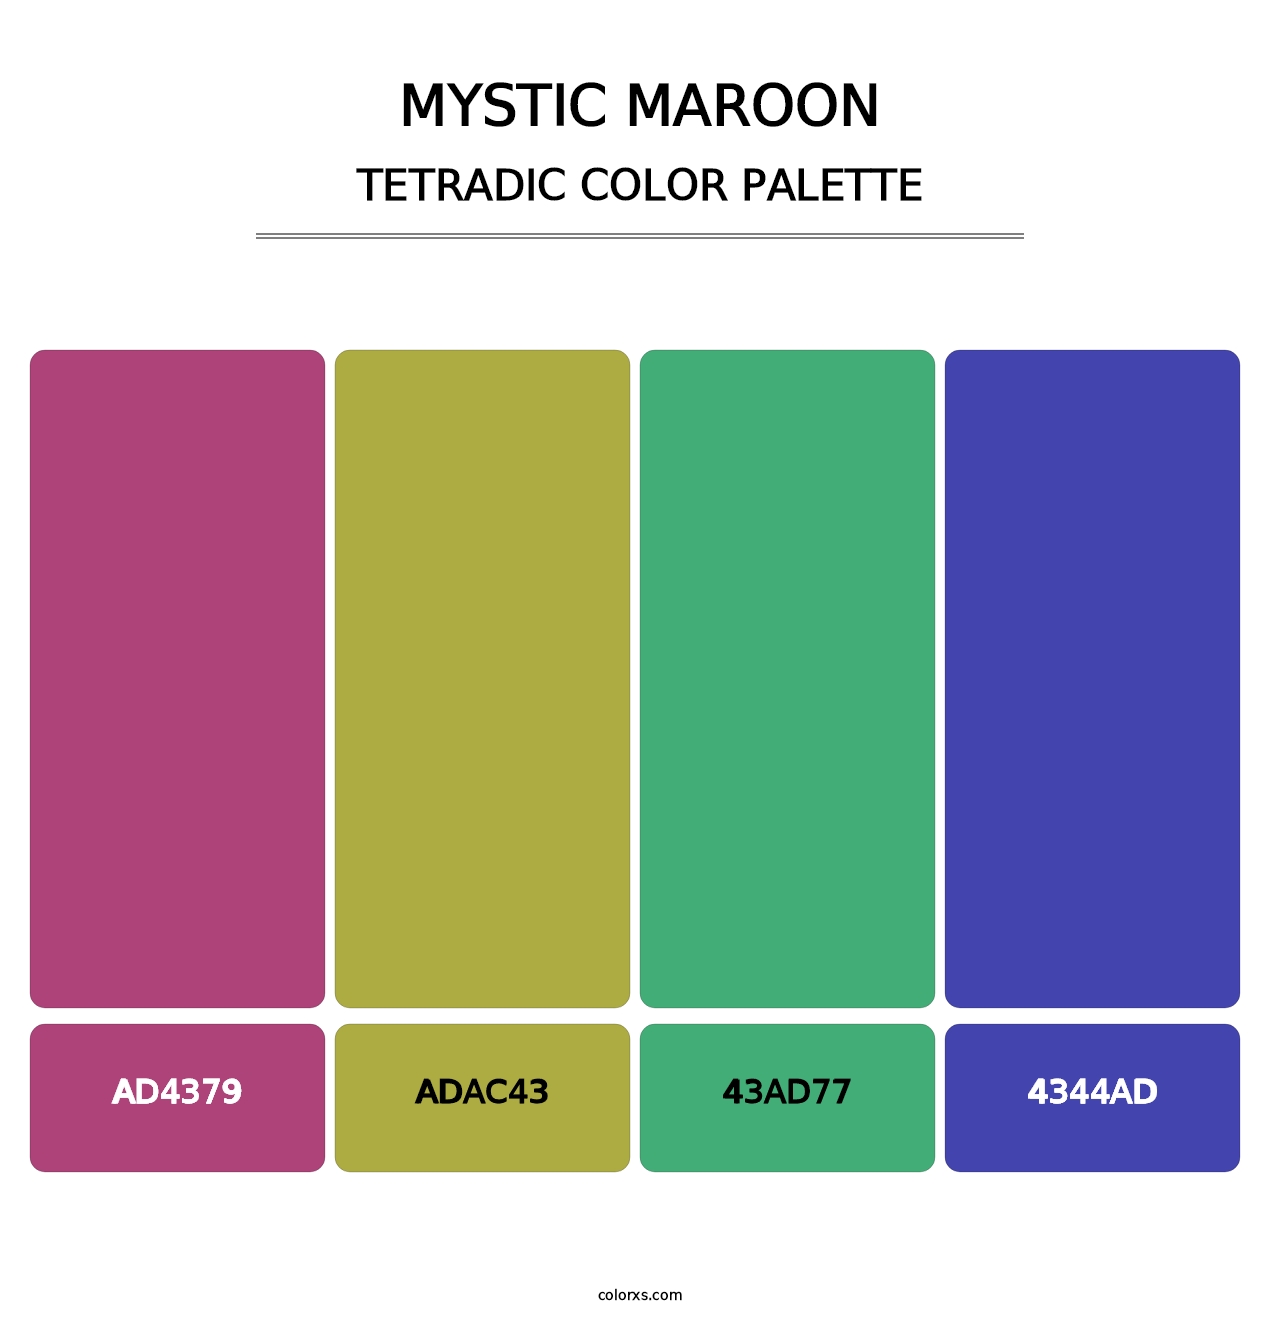 Mystic Maroon - Tetradic Color Palette